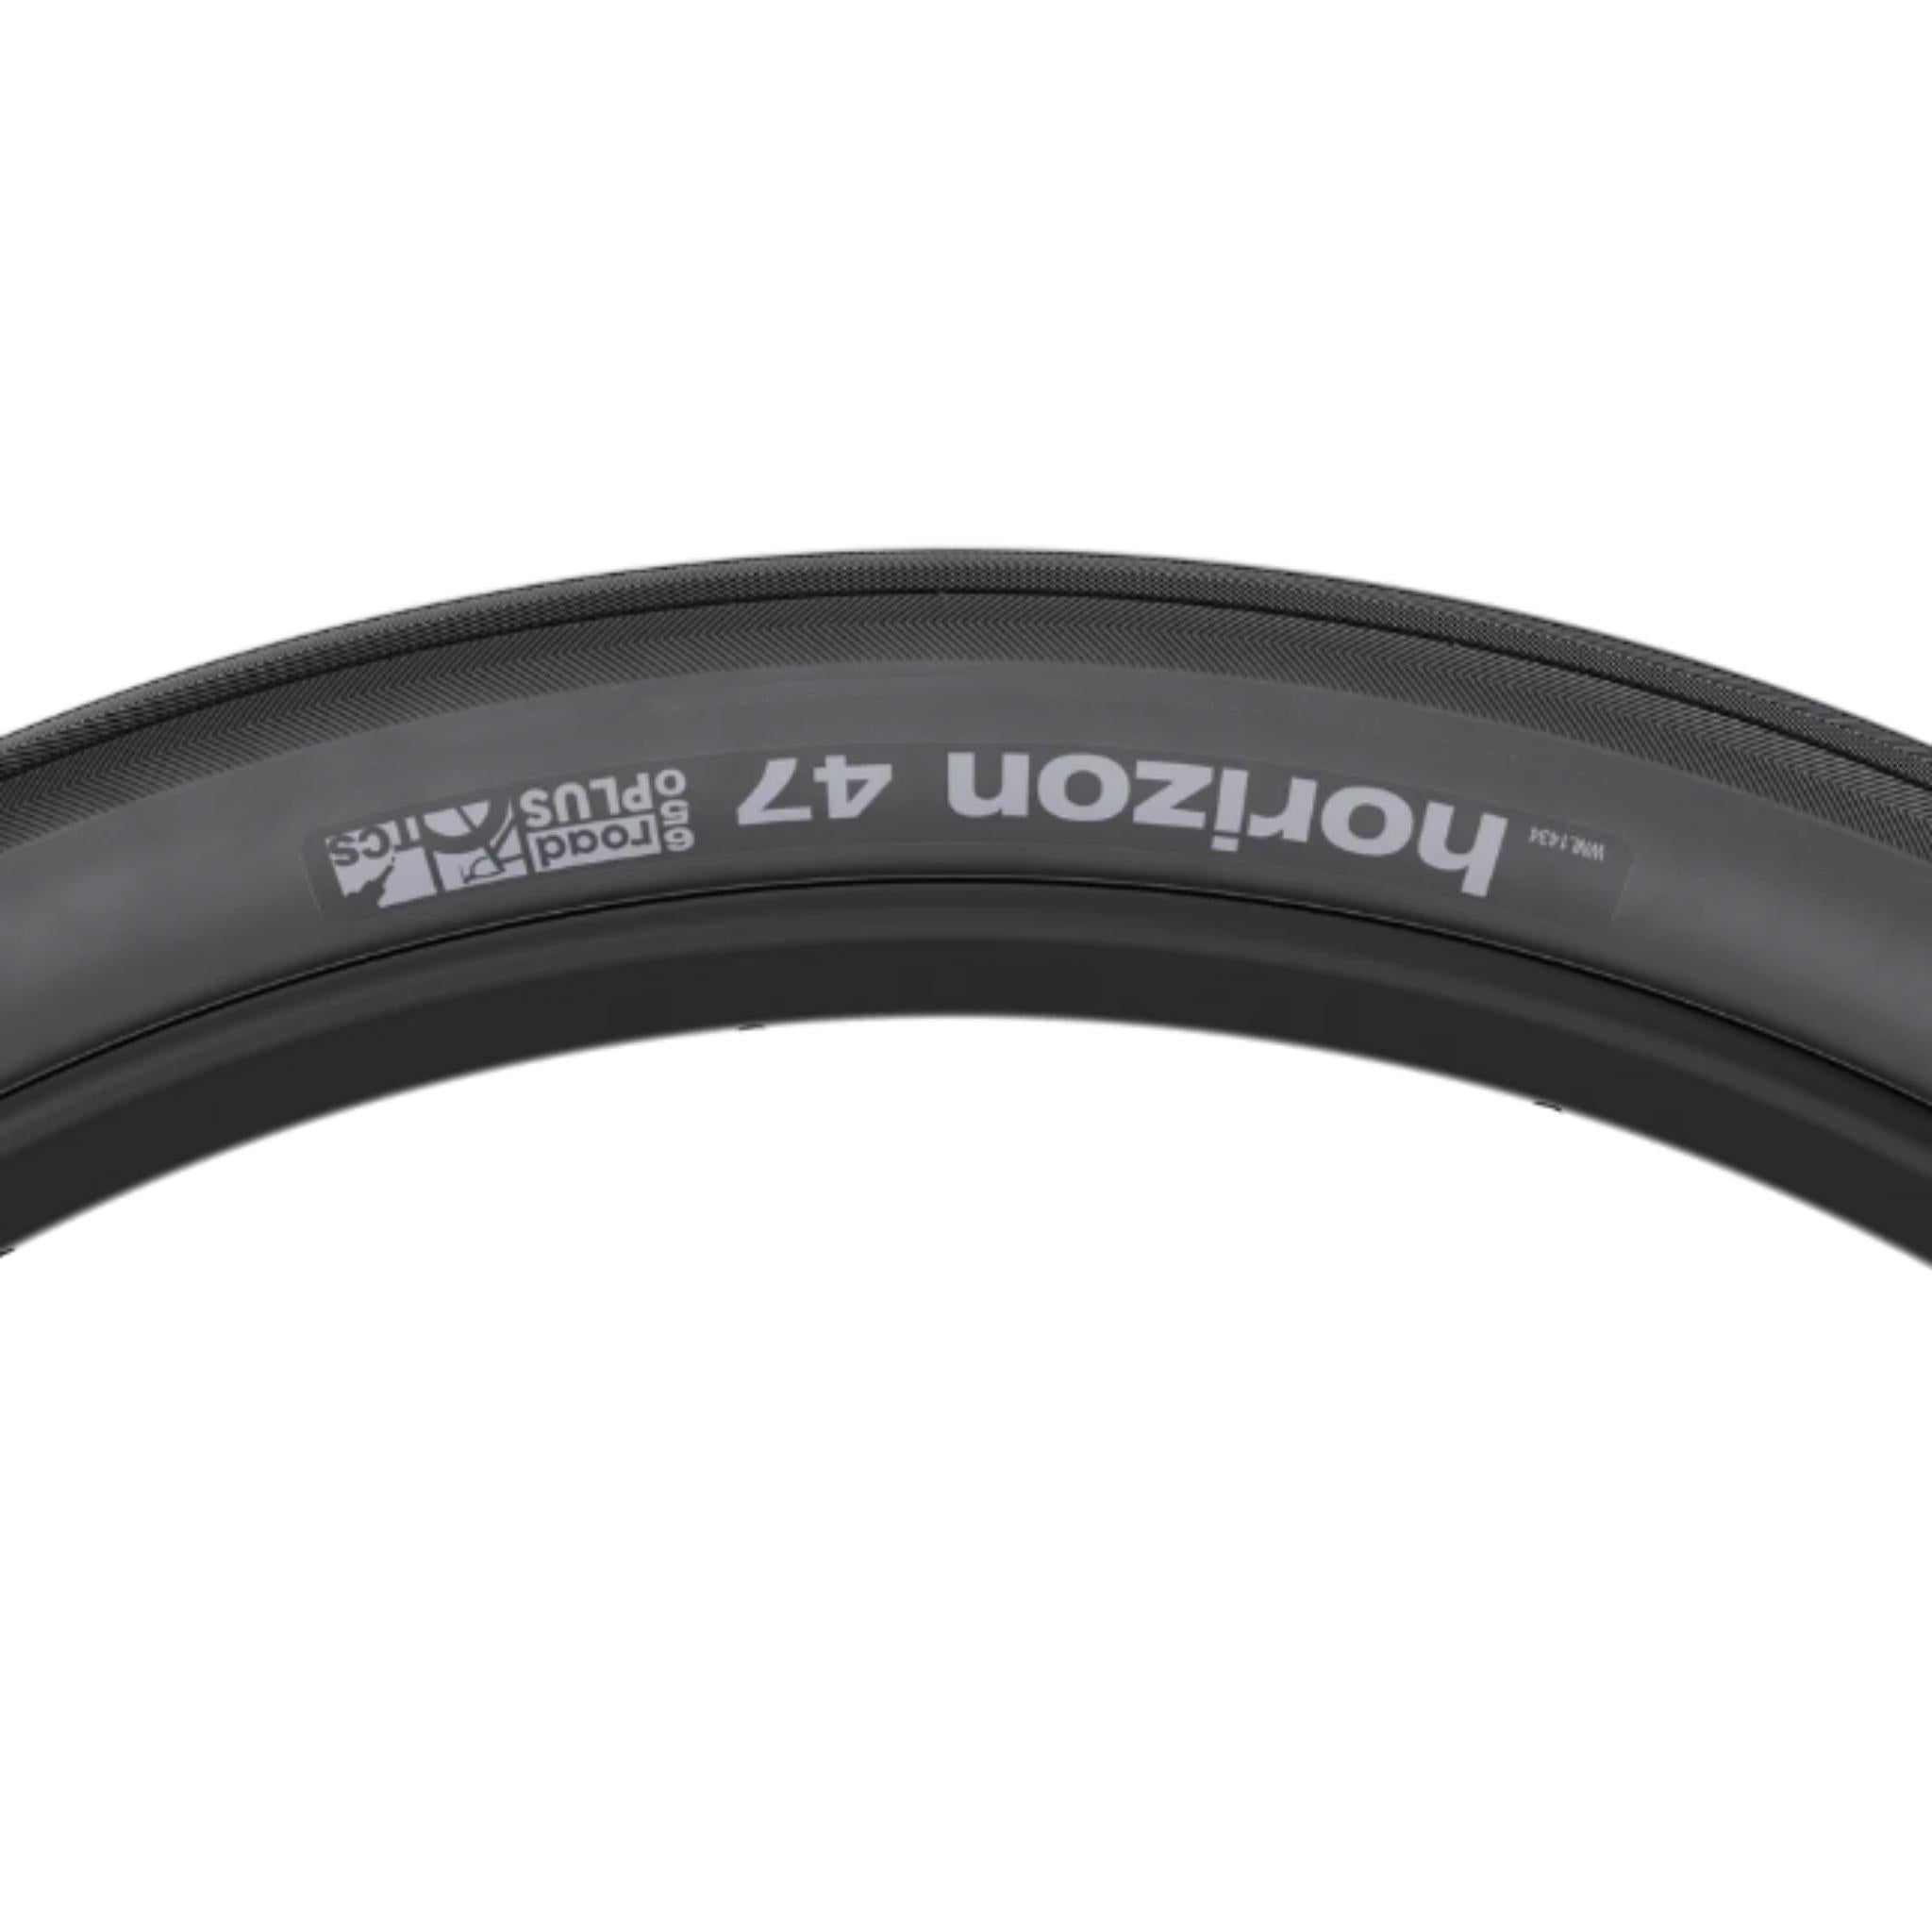 WTB Horizon Tyre